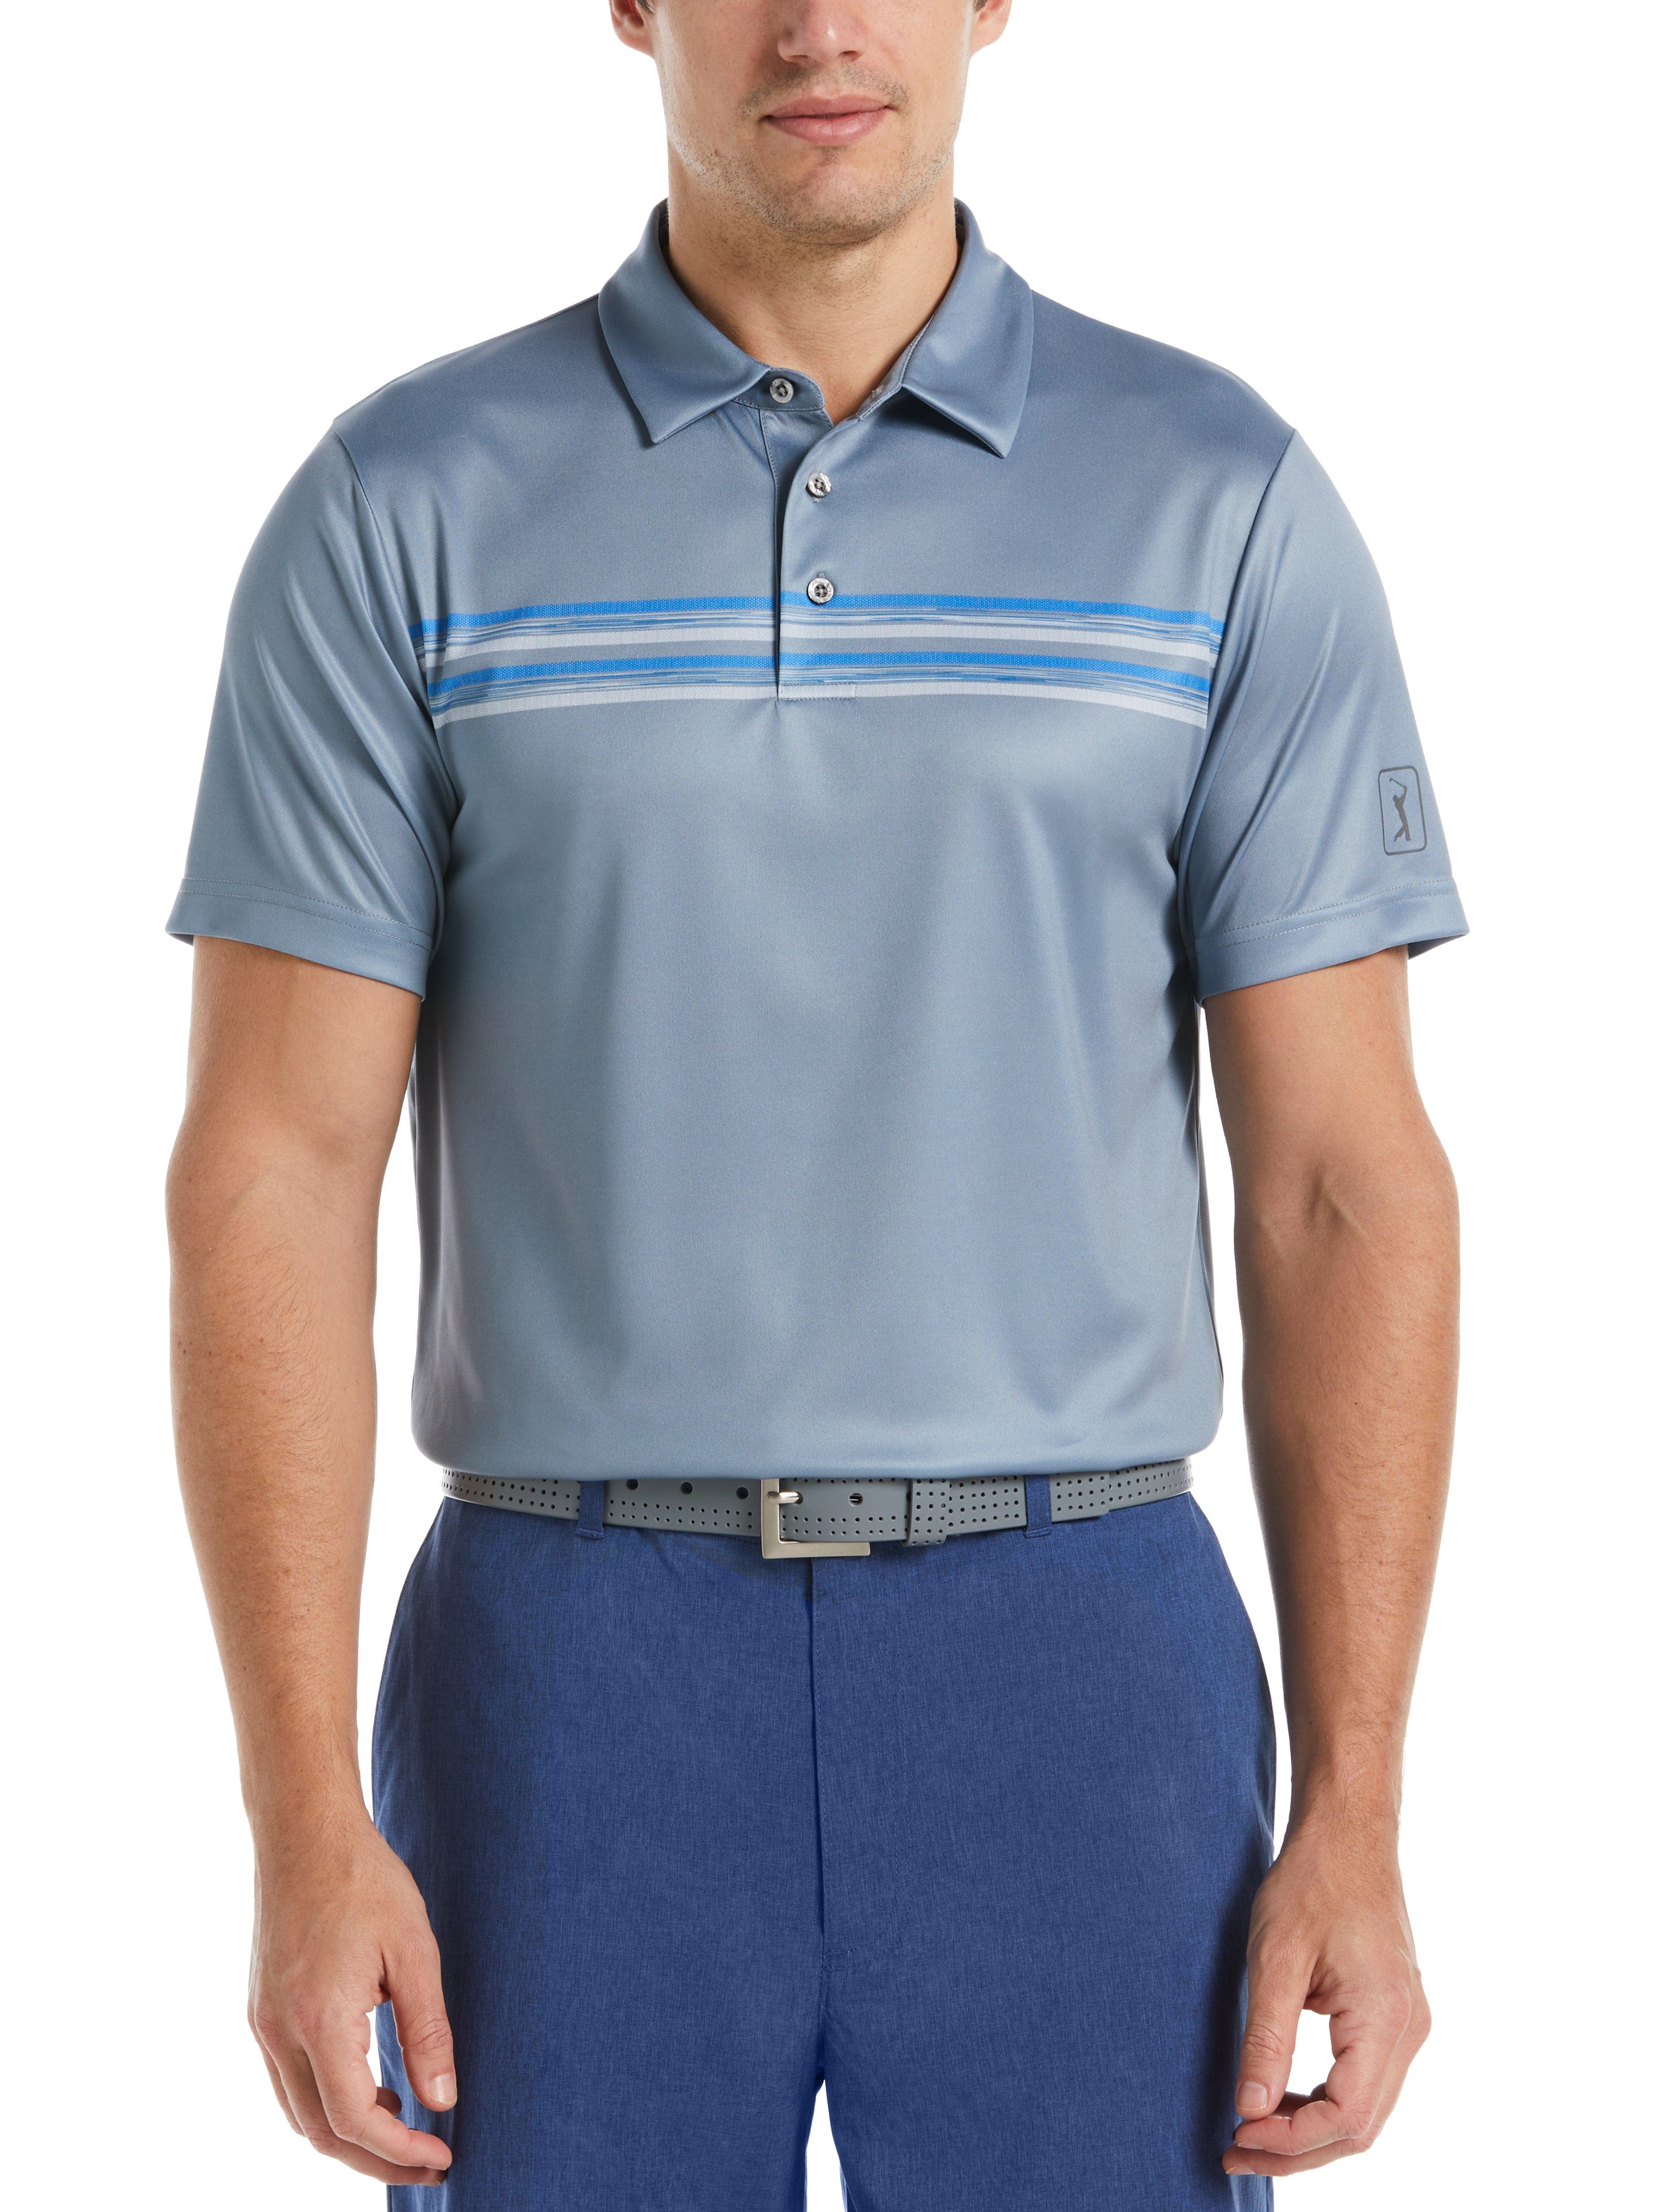 PGA TOUR Apparel Mens Chest Stripe Golf Polo Shirt, Size Small, Tradewinds Gray, 100% Polyester | Golf Apparel Shop